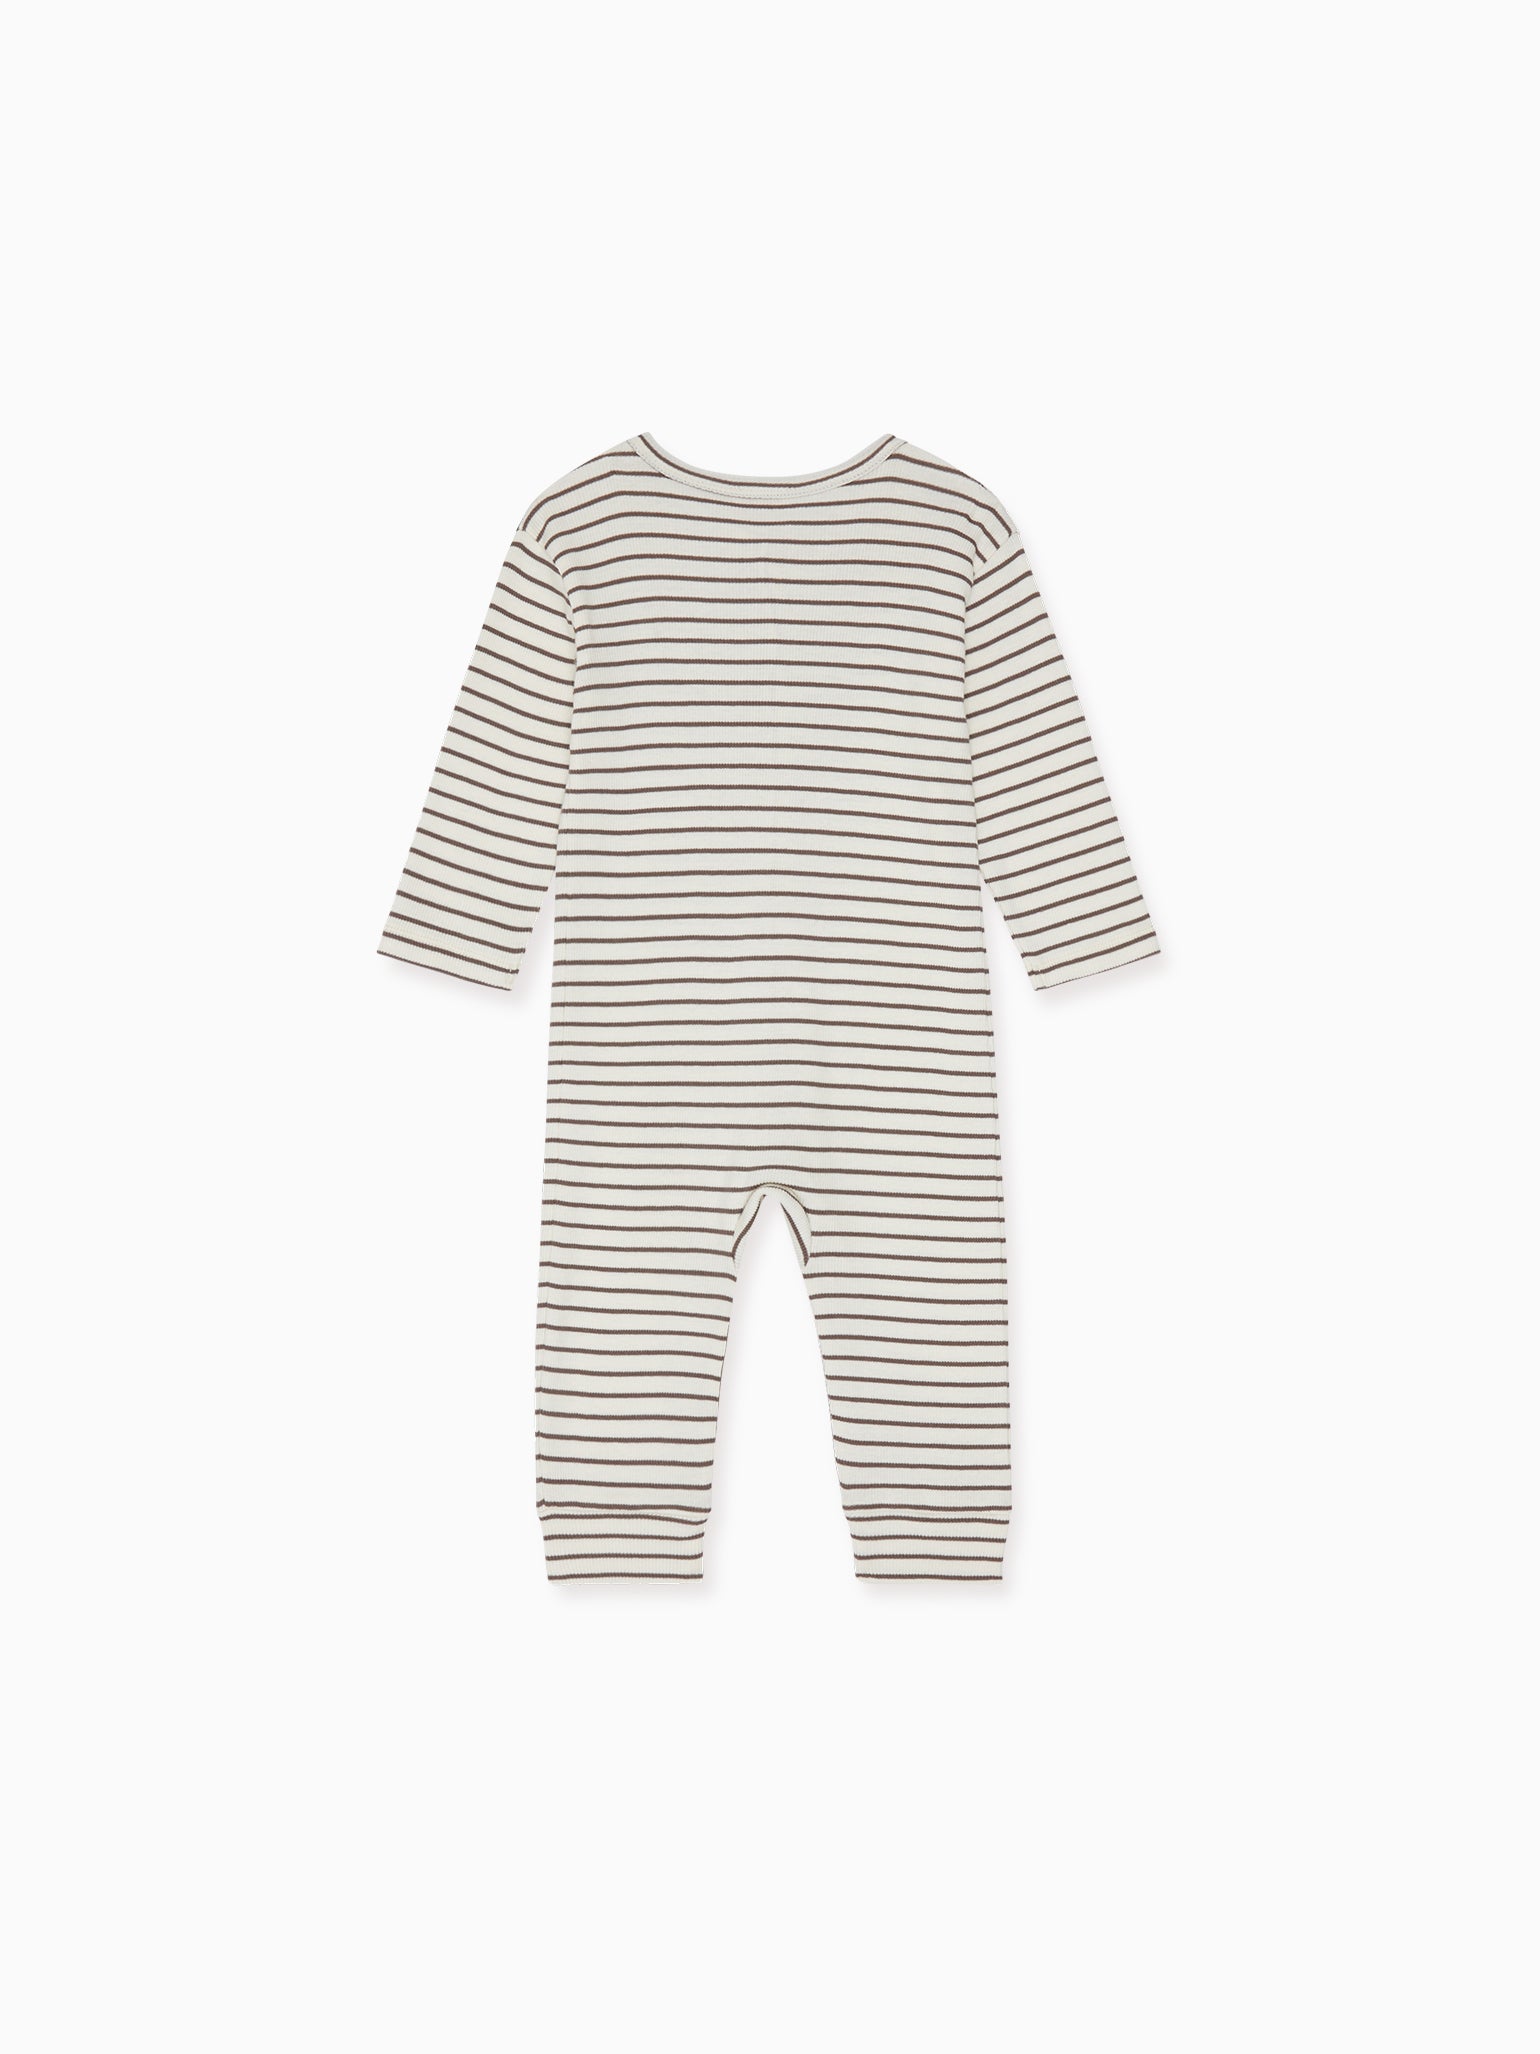 Latte Stripe Levie Baby Sleepsuit